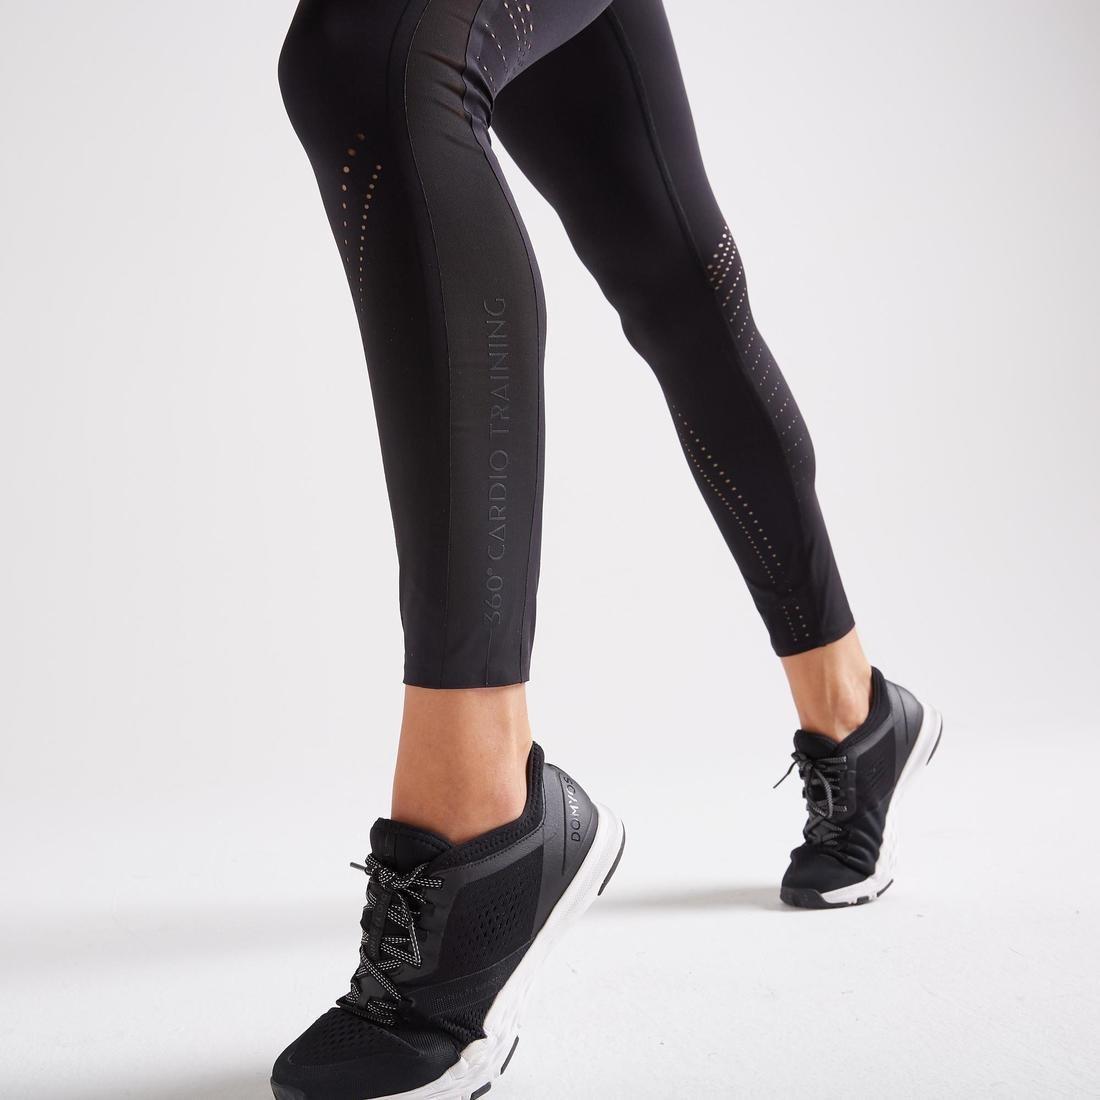 Women's Cardio Fitness High-Waisted Shaping Short Leggings - Black DOMYOS